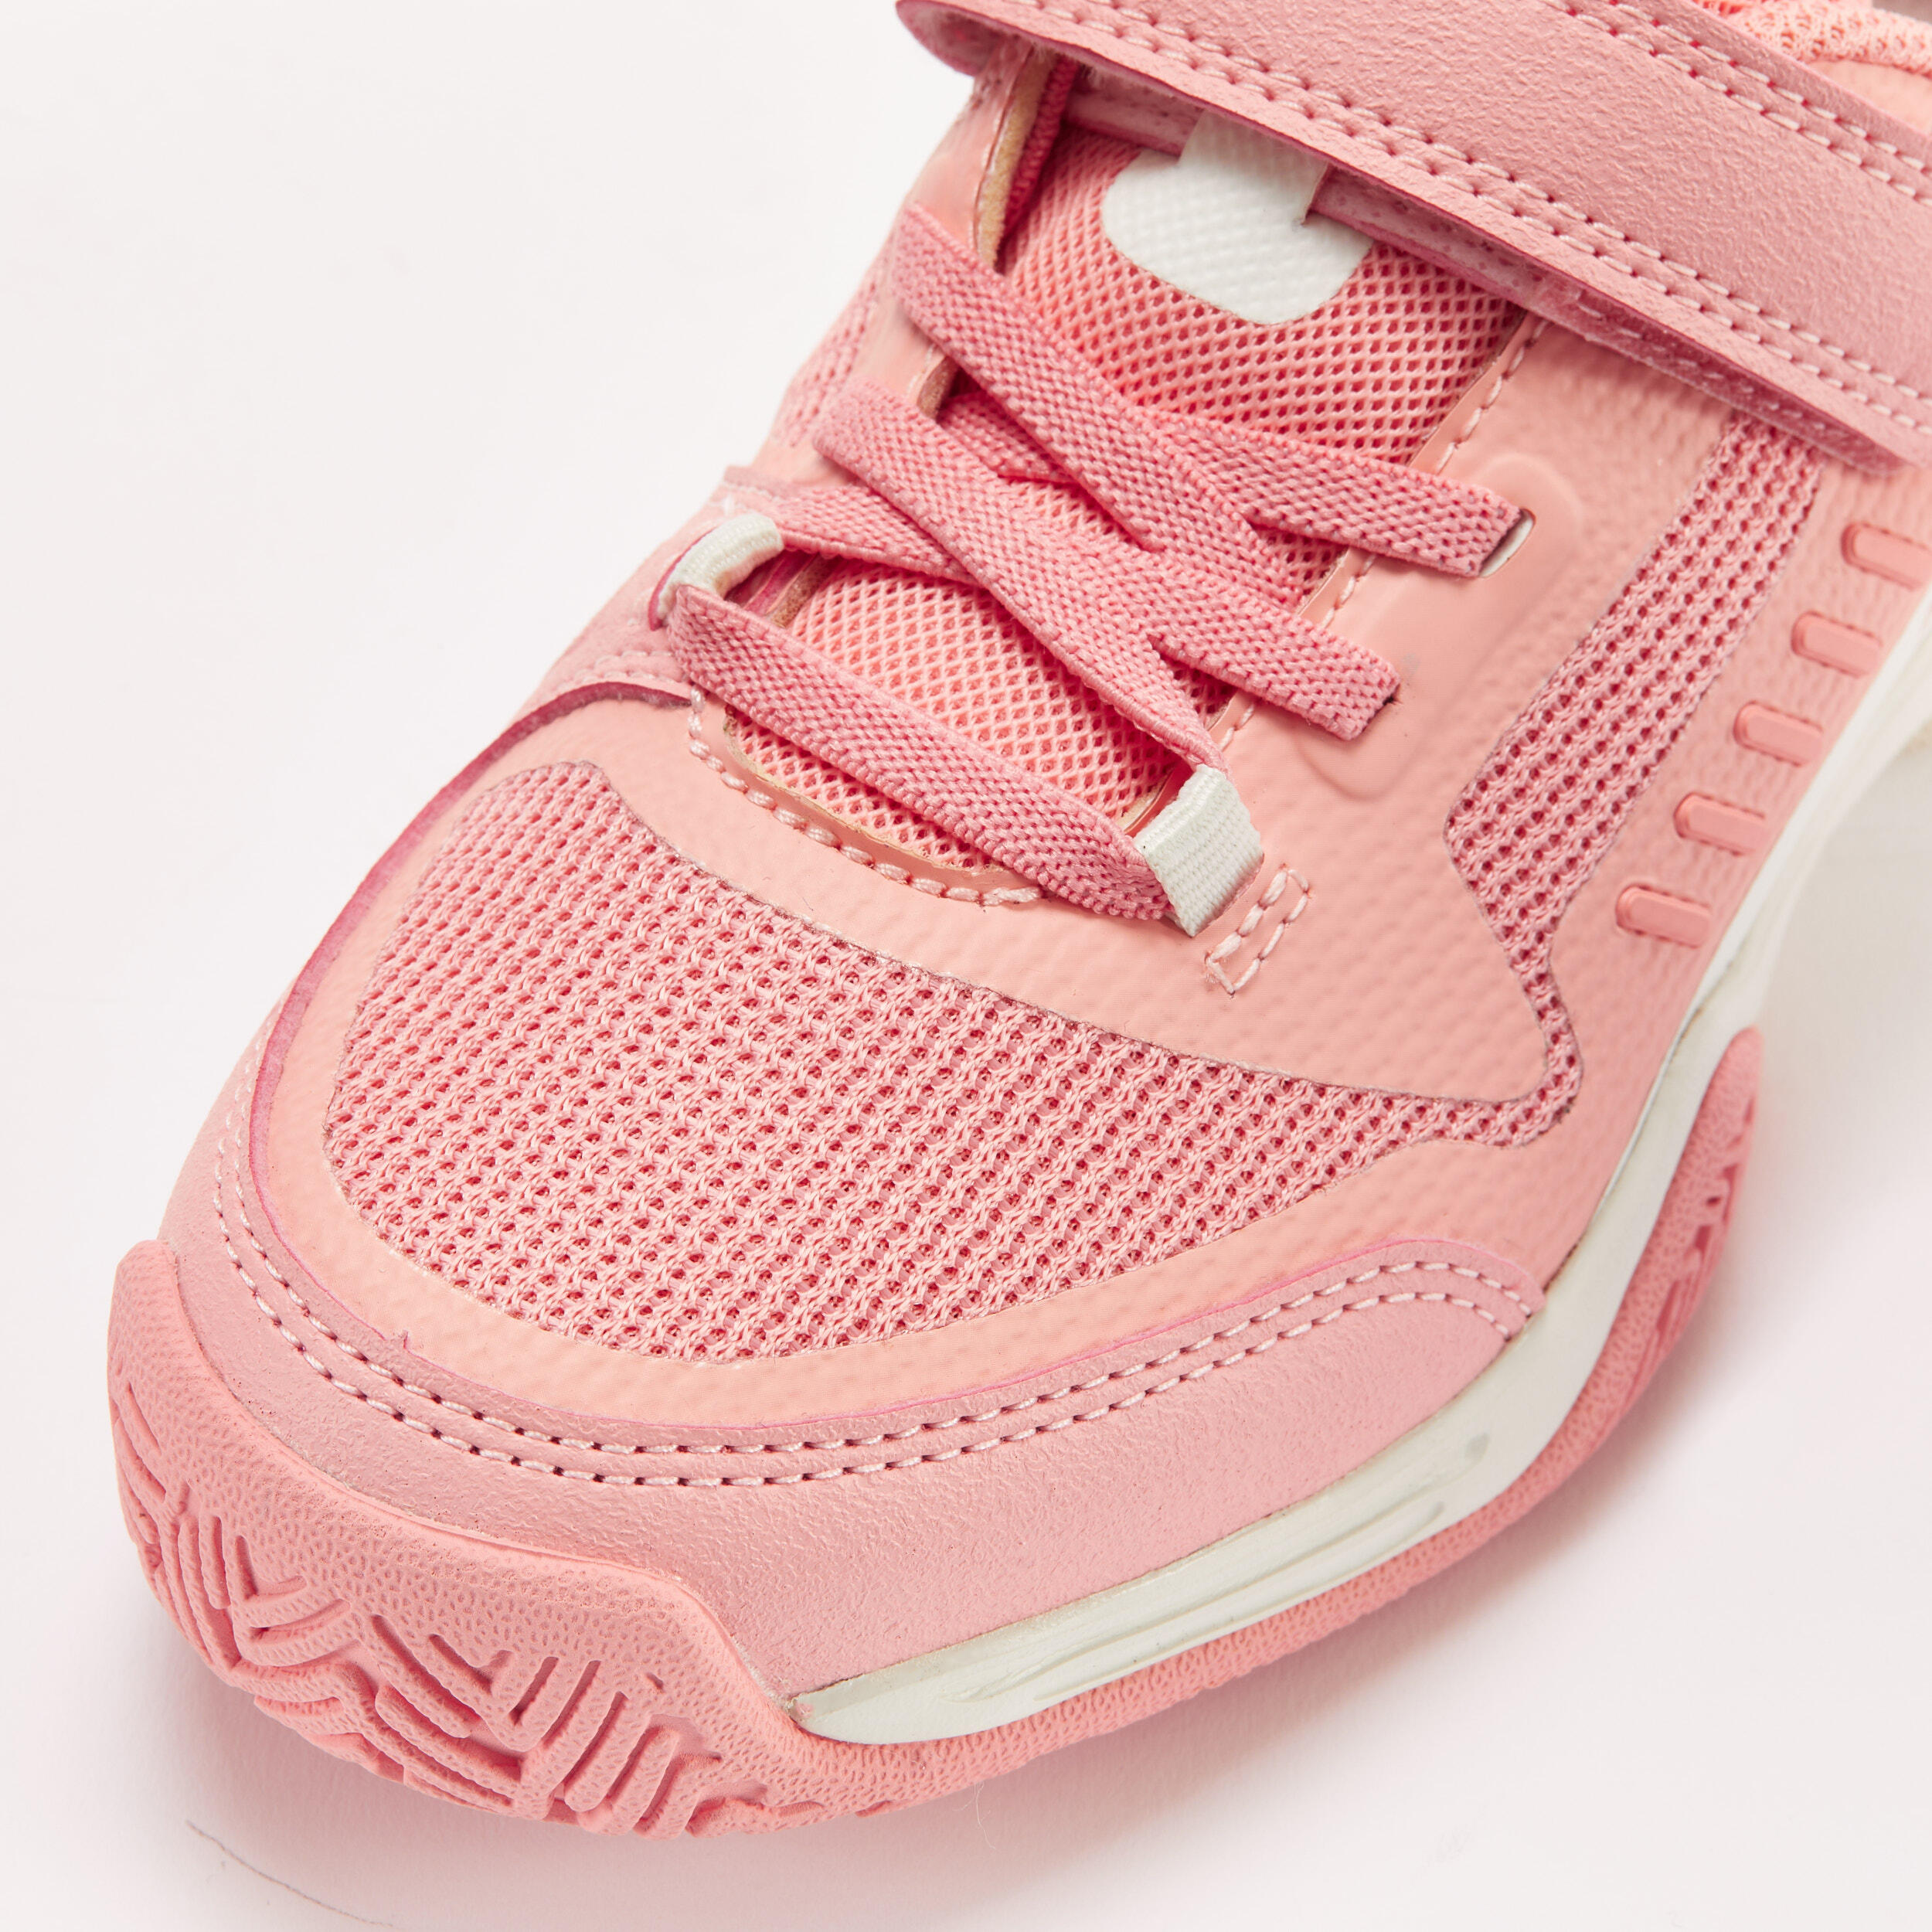 Kids' Rip-Tab Tennis Shoes TS500 Fast KD - Pinkfire 8/9